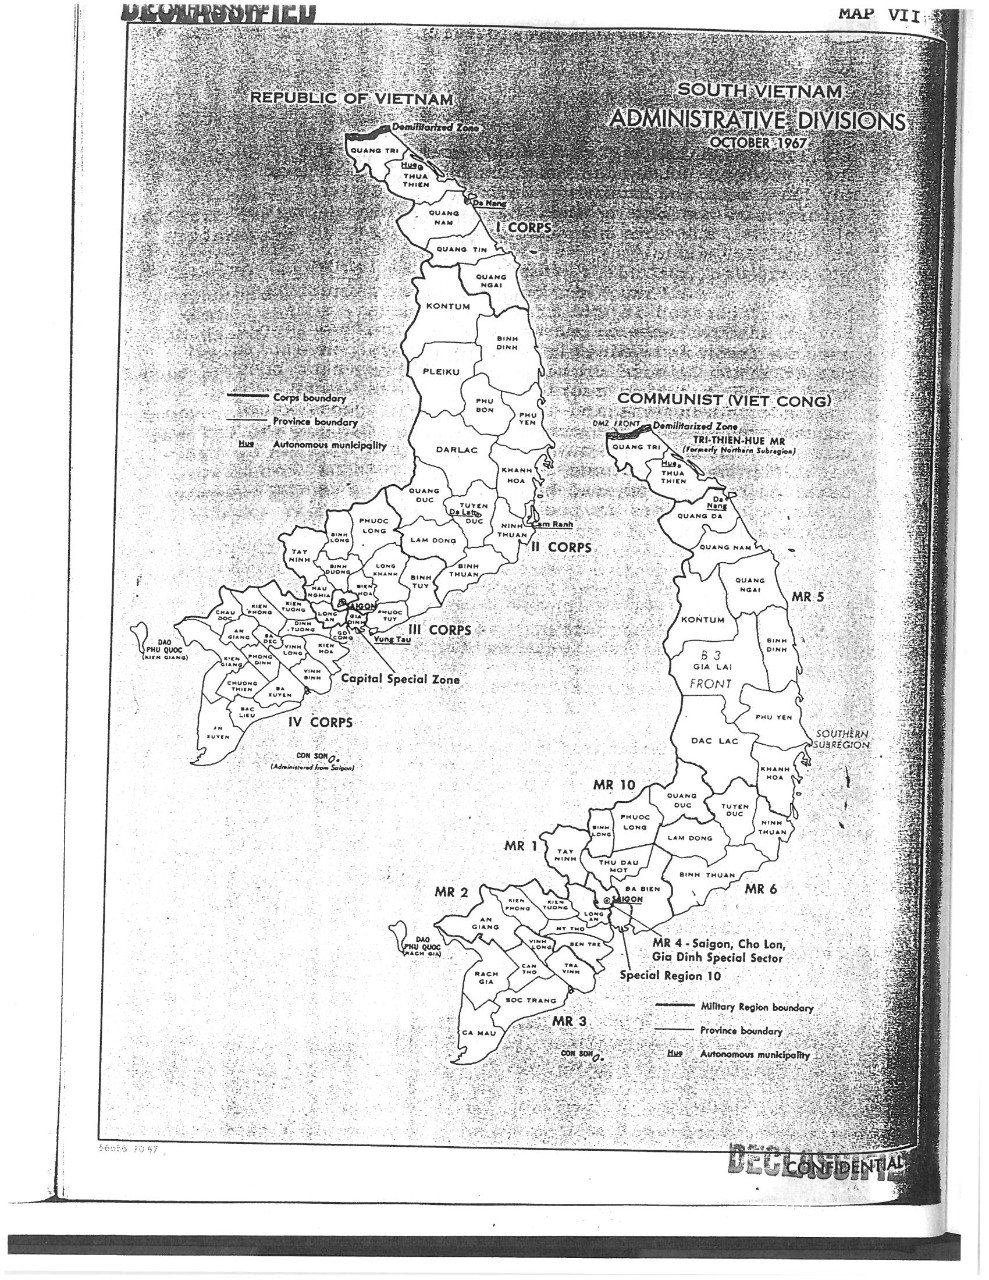 South Vietnam Administrative Divisions